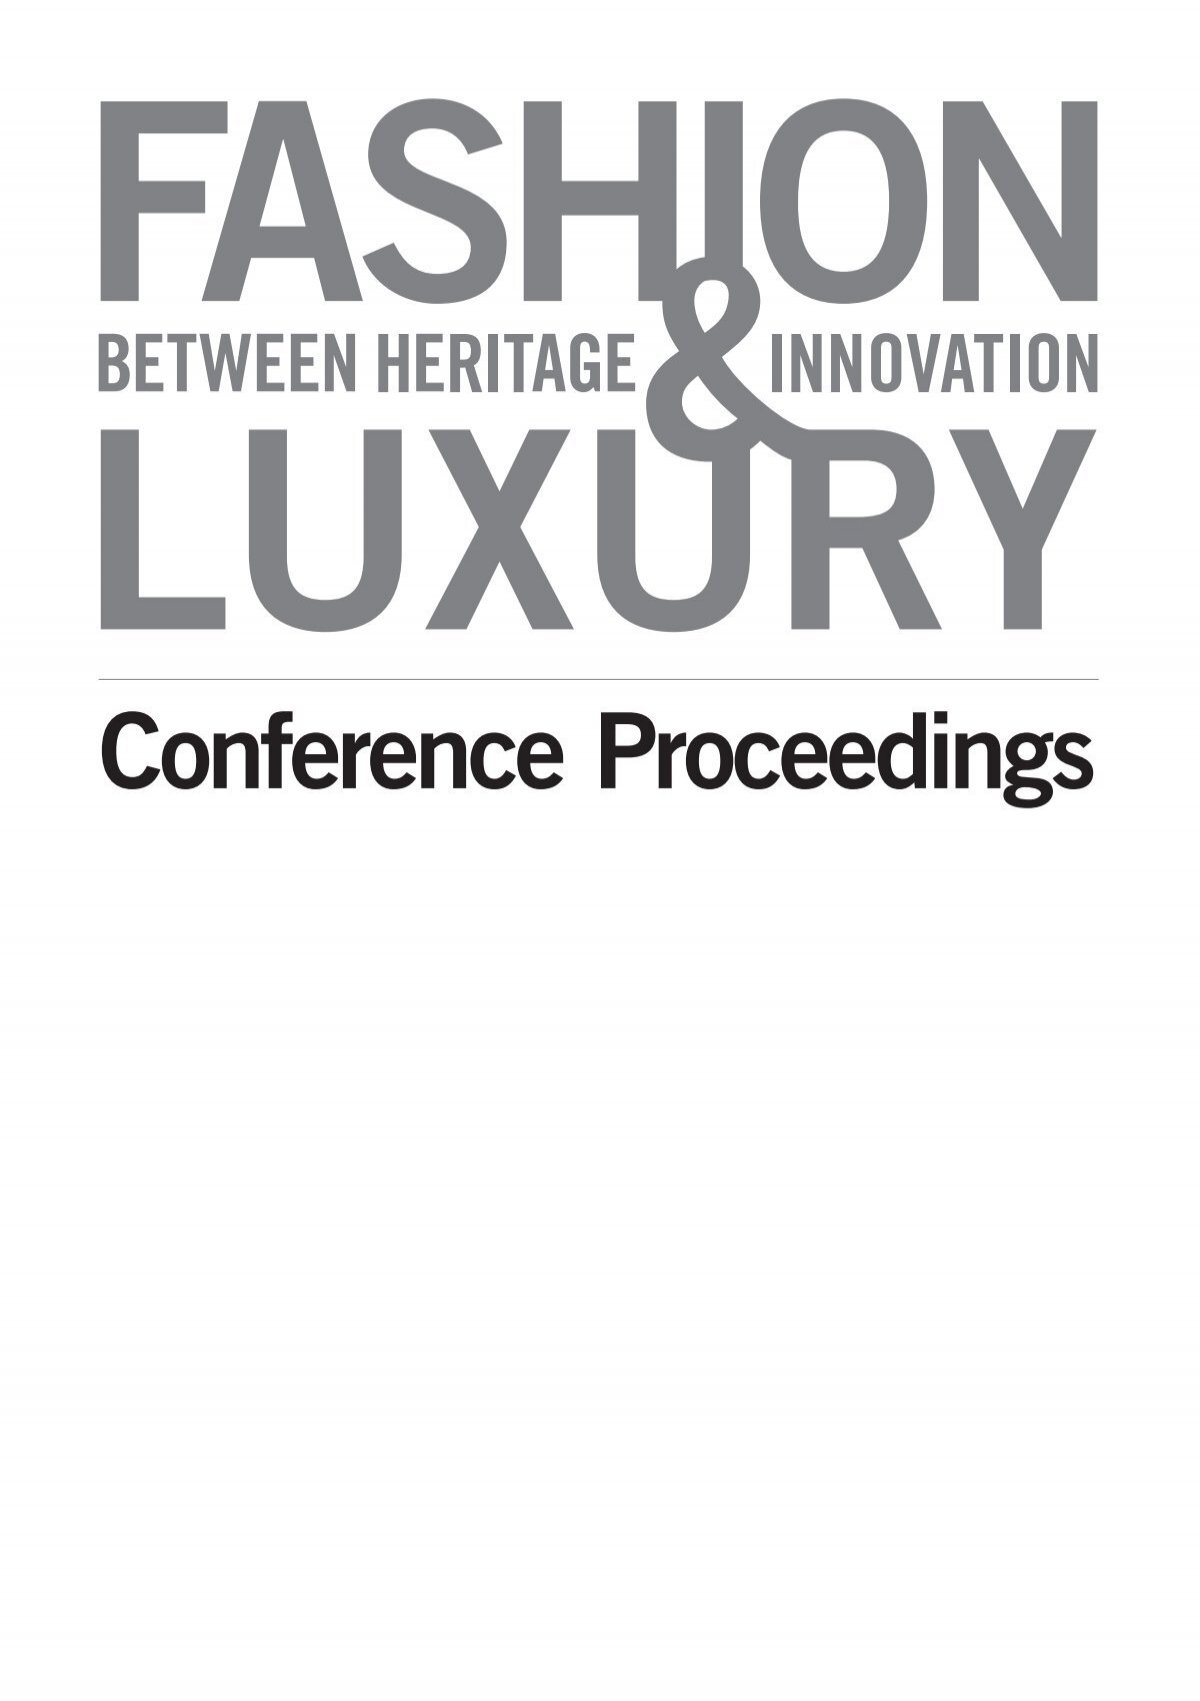 LVMH: Preserving Heritage, Inspiring Innovation - The Talent Economy  Podcast